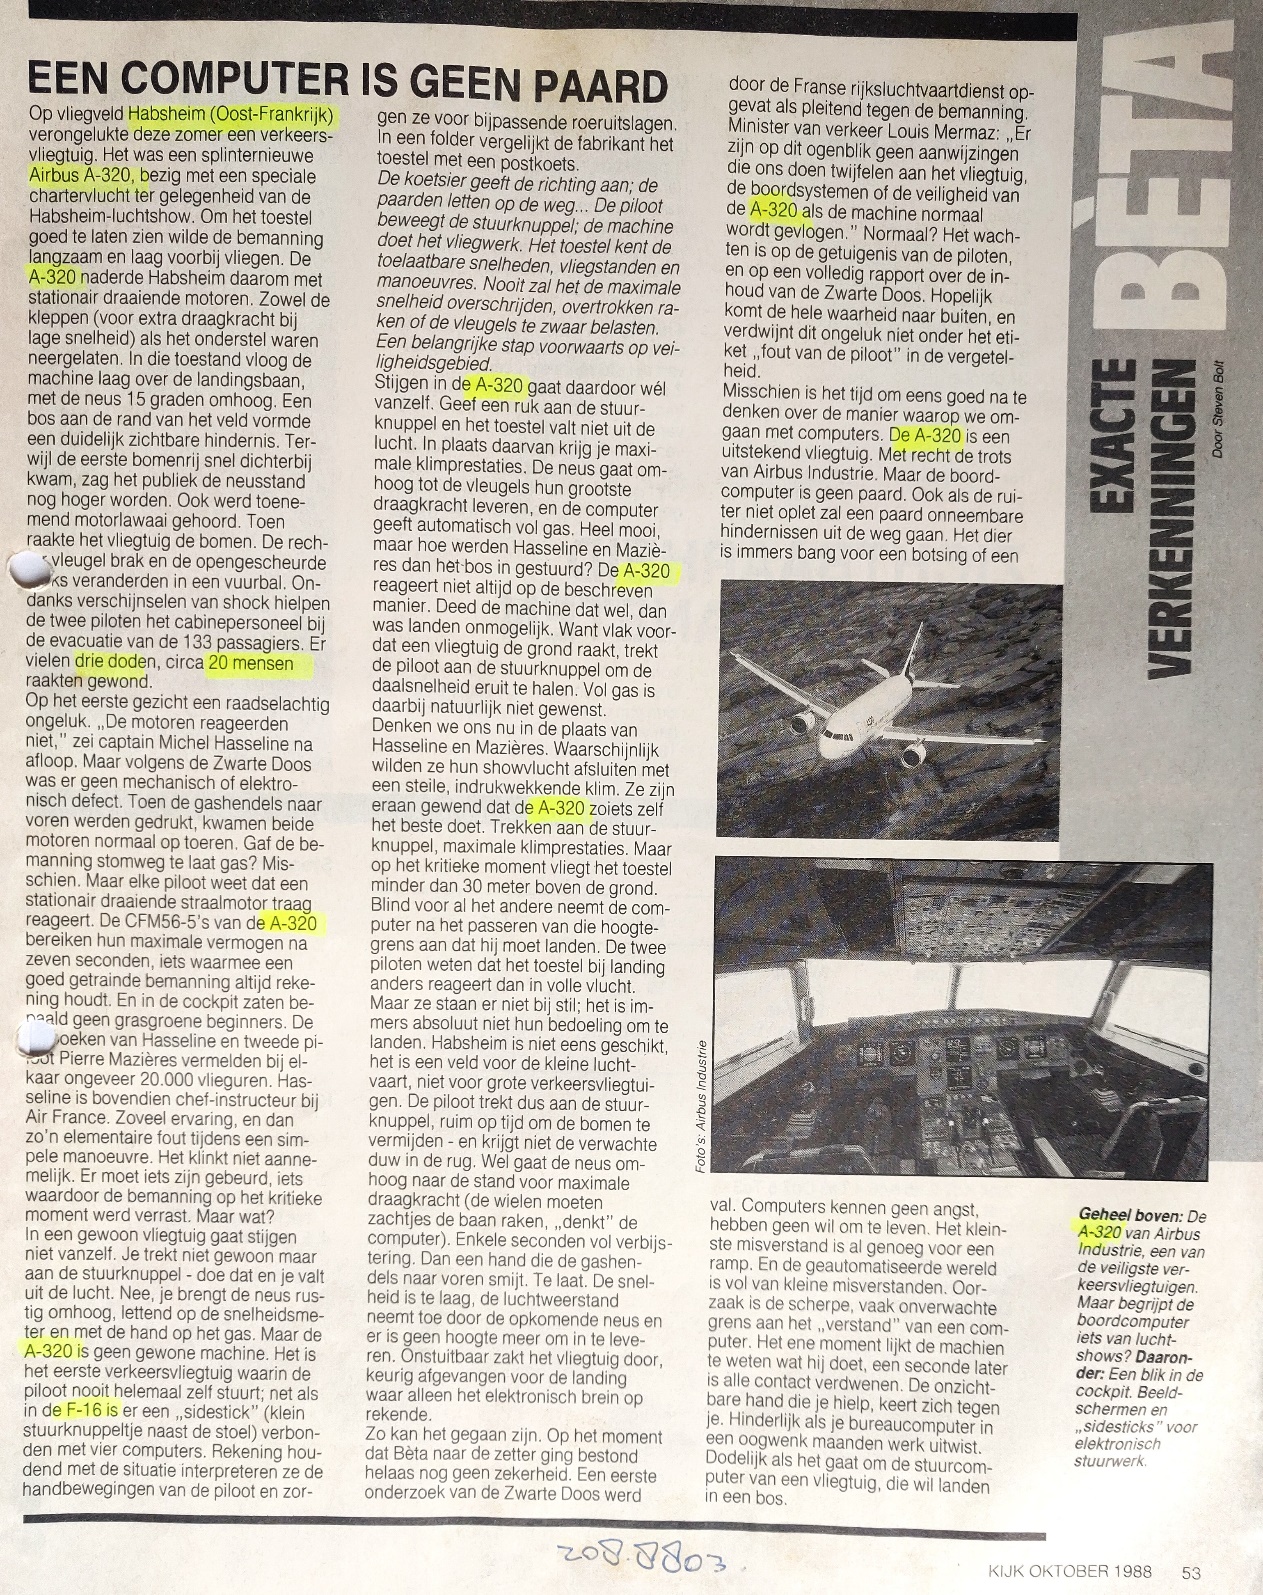 A320-111 | KIJK article about crash of A320 near Habsheim in 1988 | KIJK OKTOBER 1988 